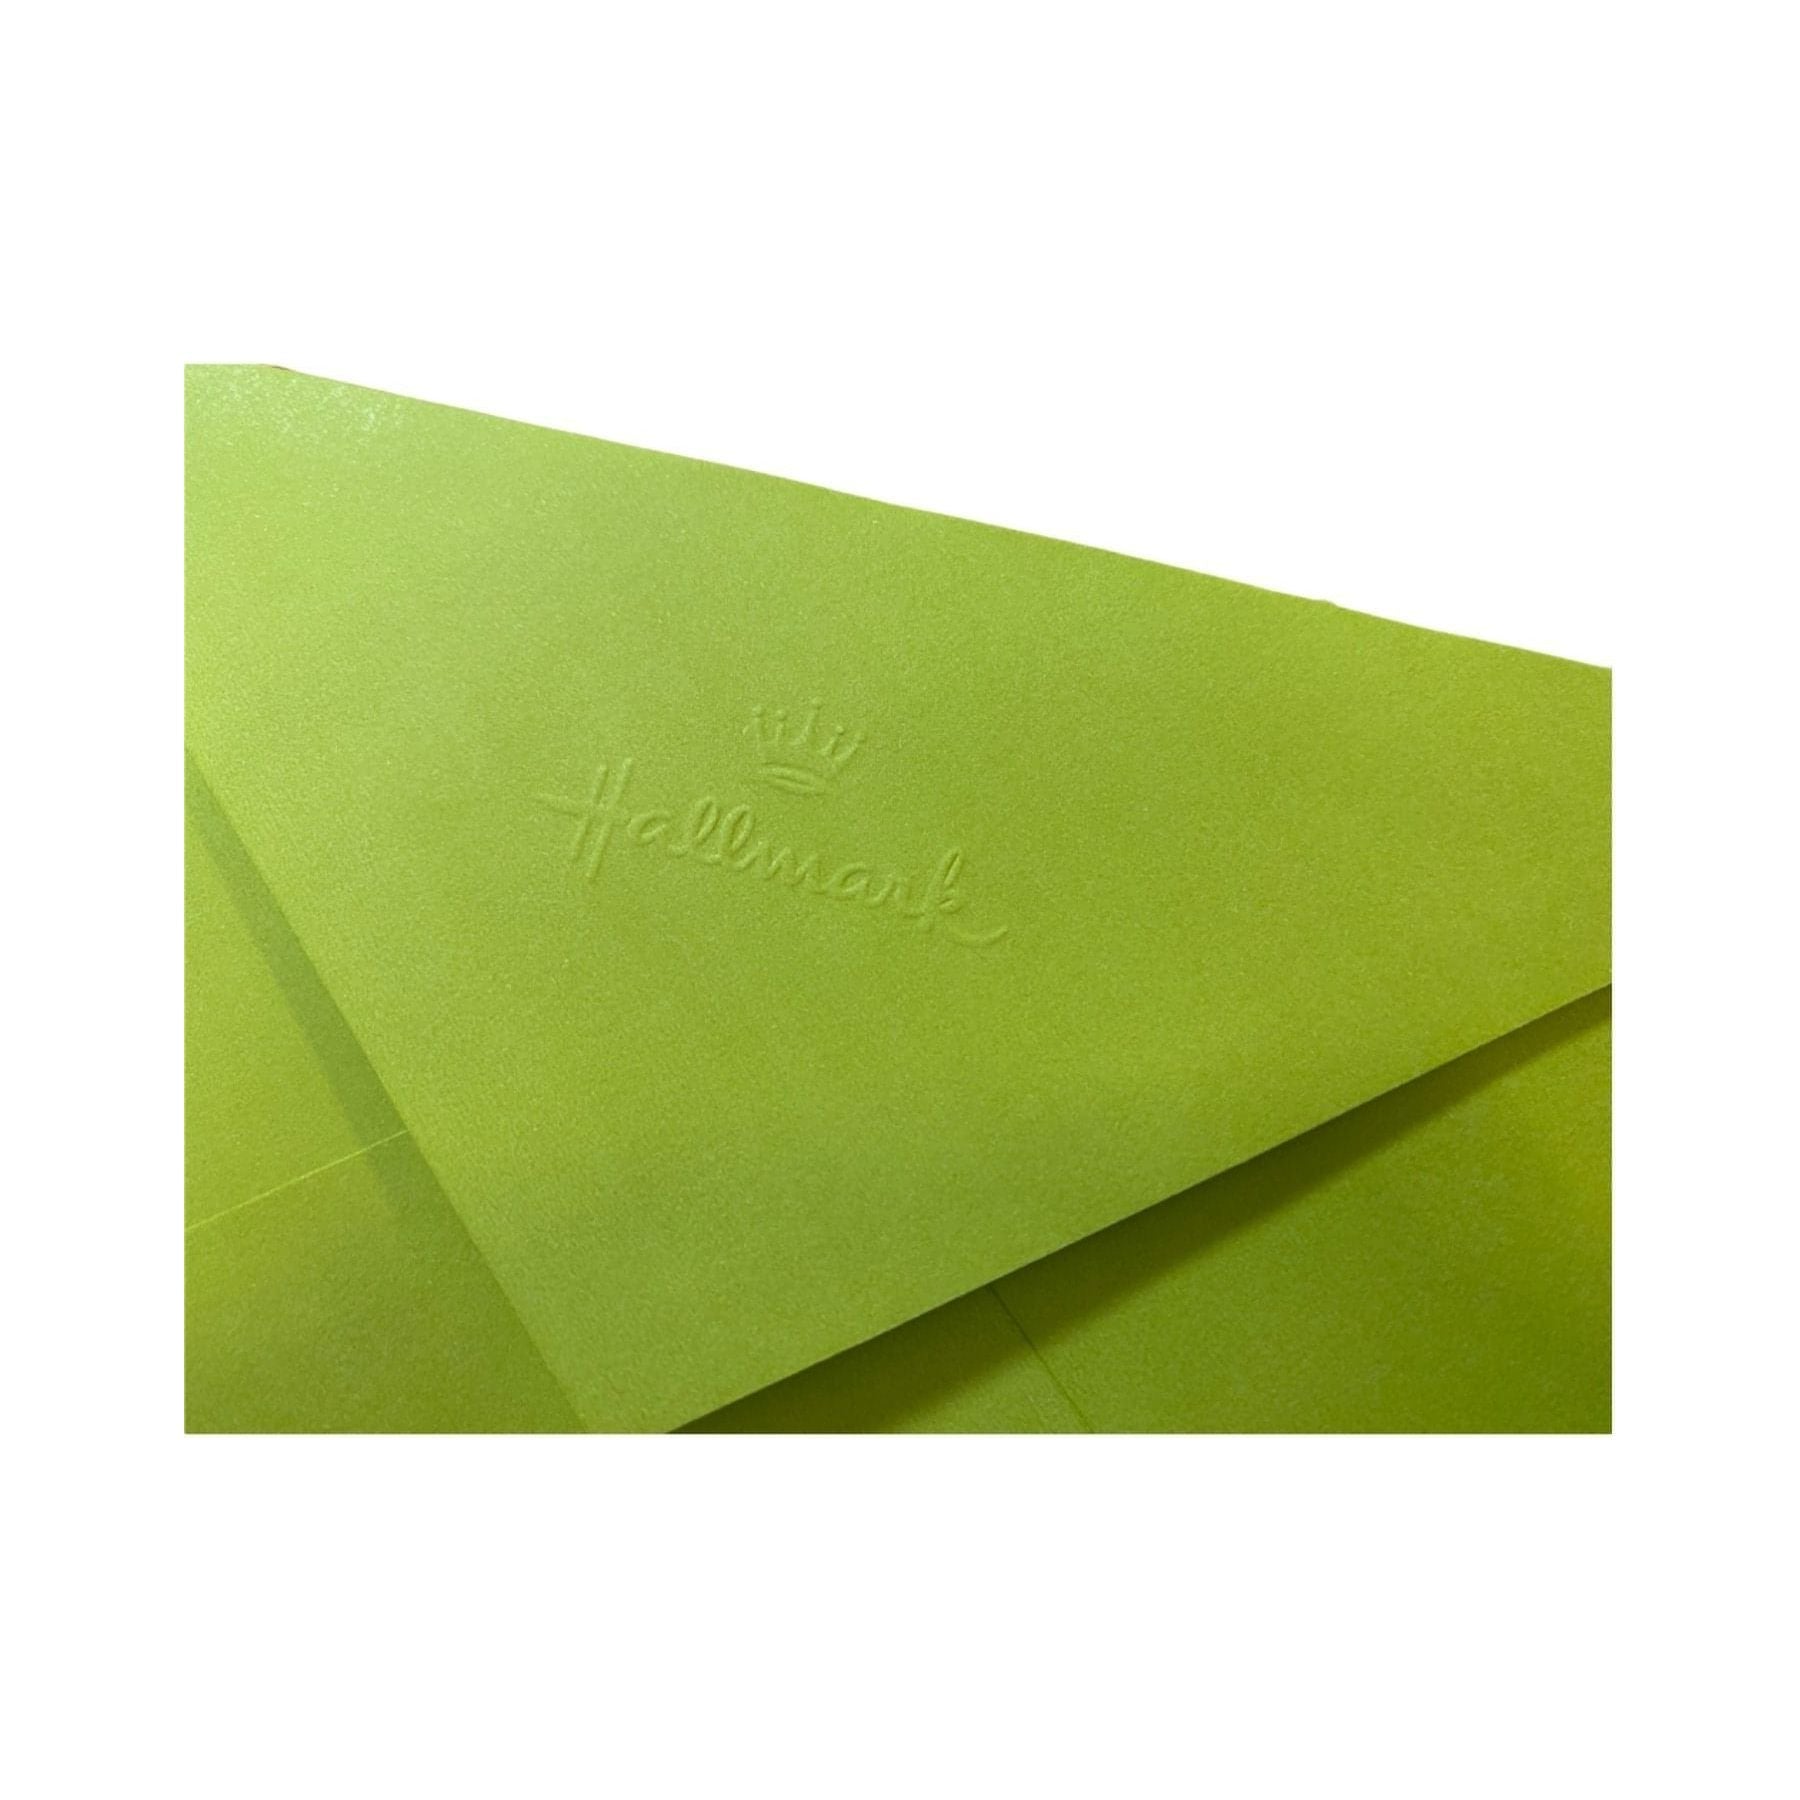 Hallmark-Birthday Card with Envelope - Heartline by Hallmark - "SING Happy birthday!" - Brandat Outlet